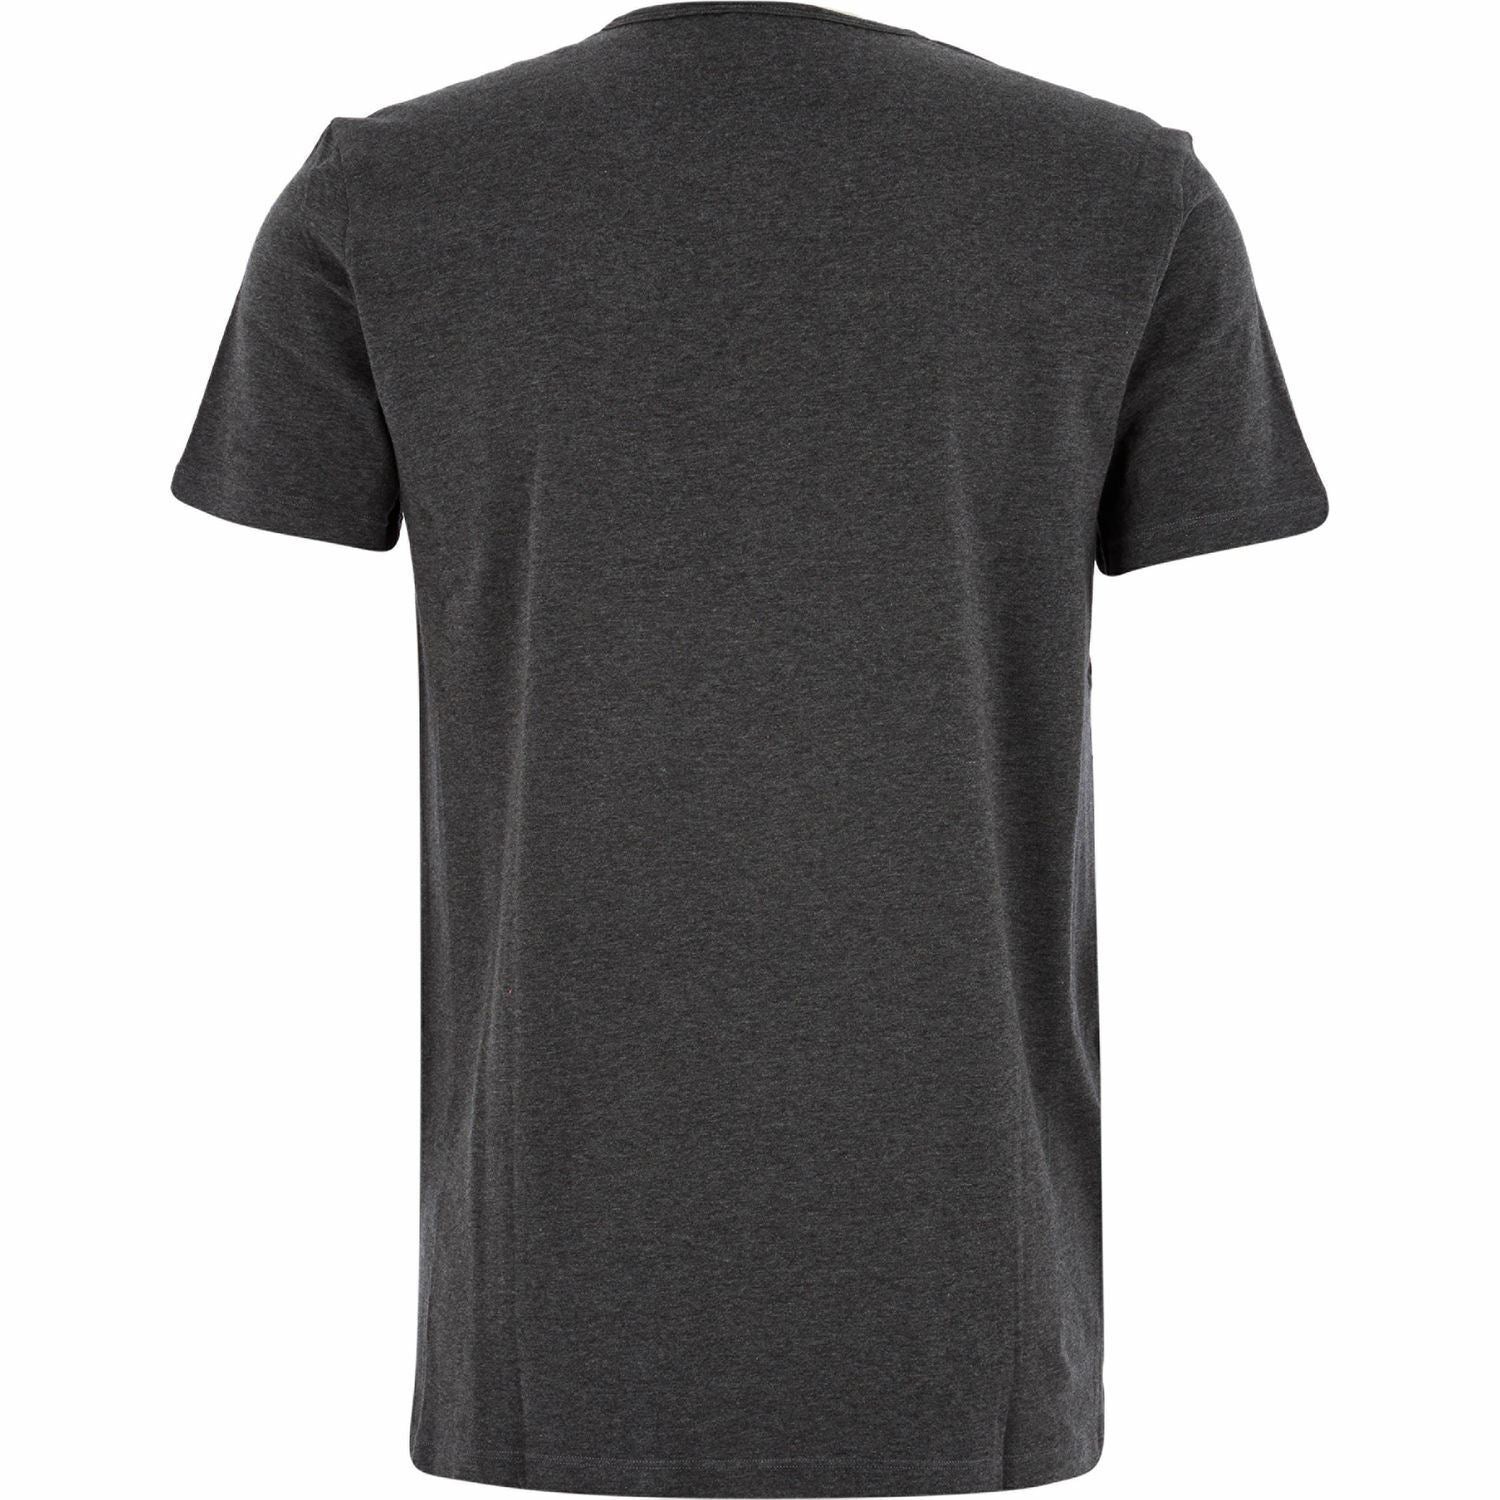 LACOSTE Men's Grey HENLEY Sleeping T-Shirt, Loungewear Top, size SMALL